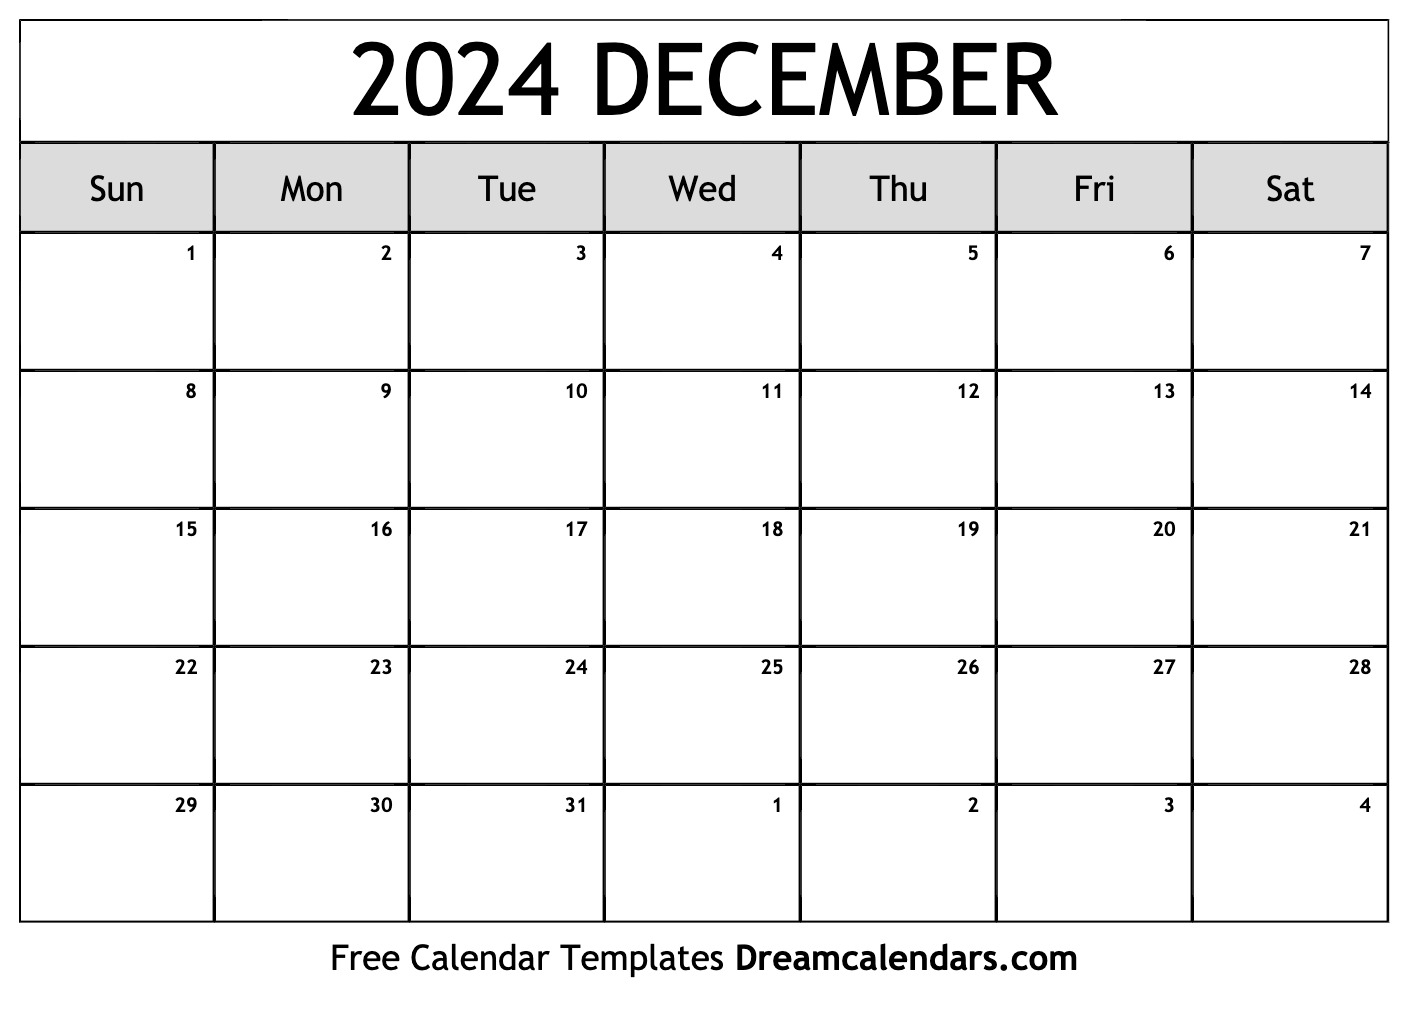 December 2024 Calendar | Free Blank Printable With Holidays for 2024 December Printable Calendar